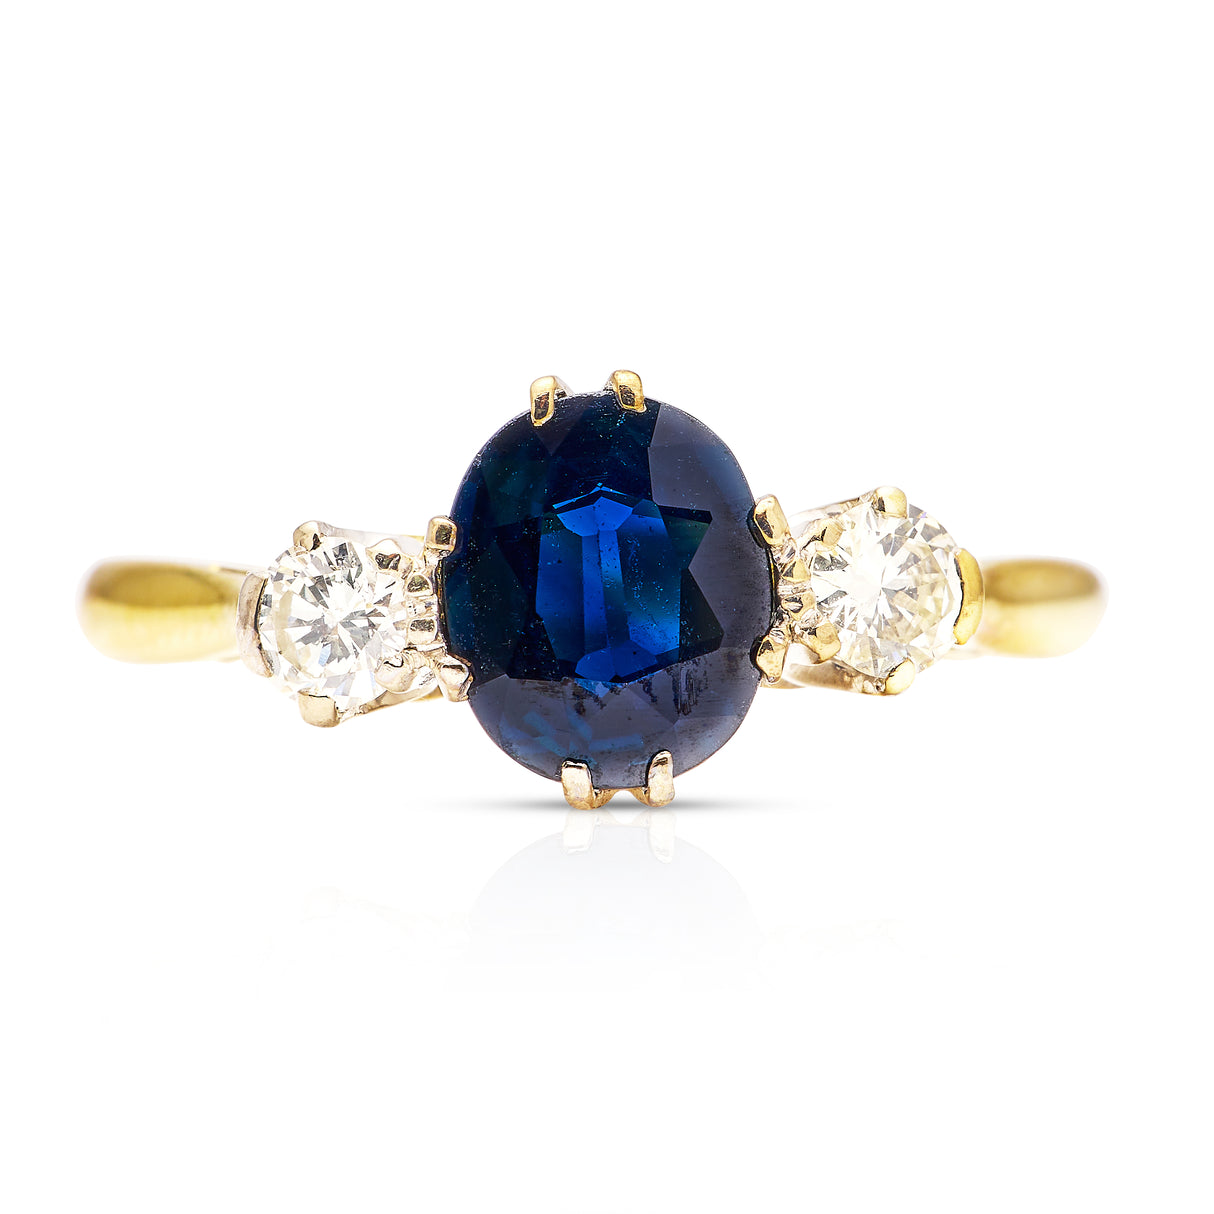 Vintage, Art Deco sapphire and diamond three-stone ring, 18ct yellow gold and platinum